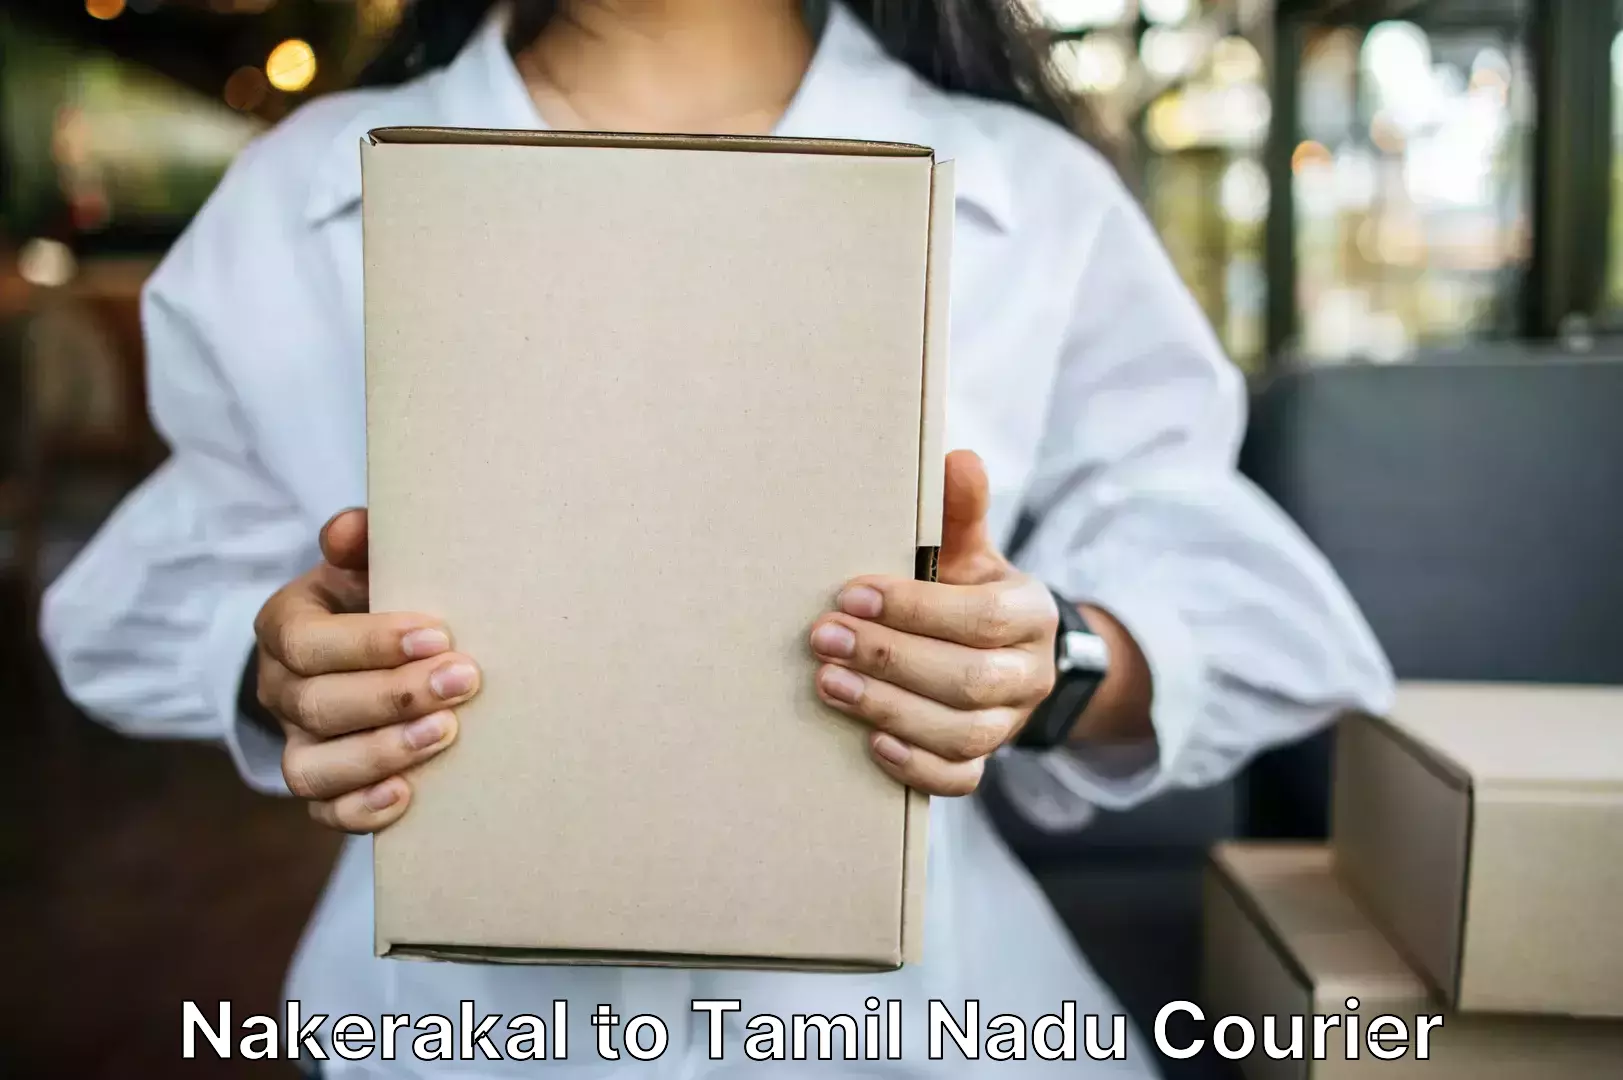 Baggage delivery optimization Nakerakal to Tamil Nadu